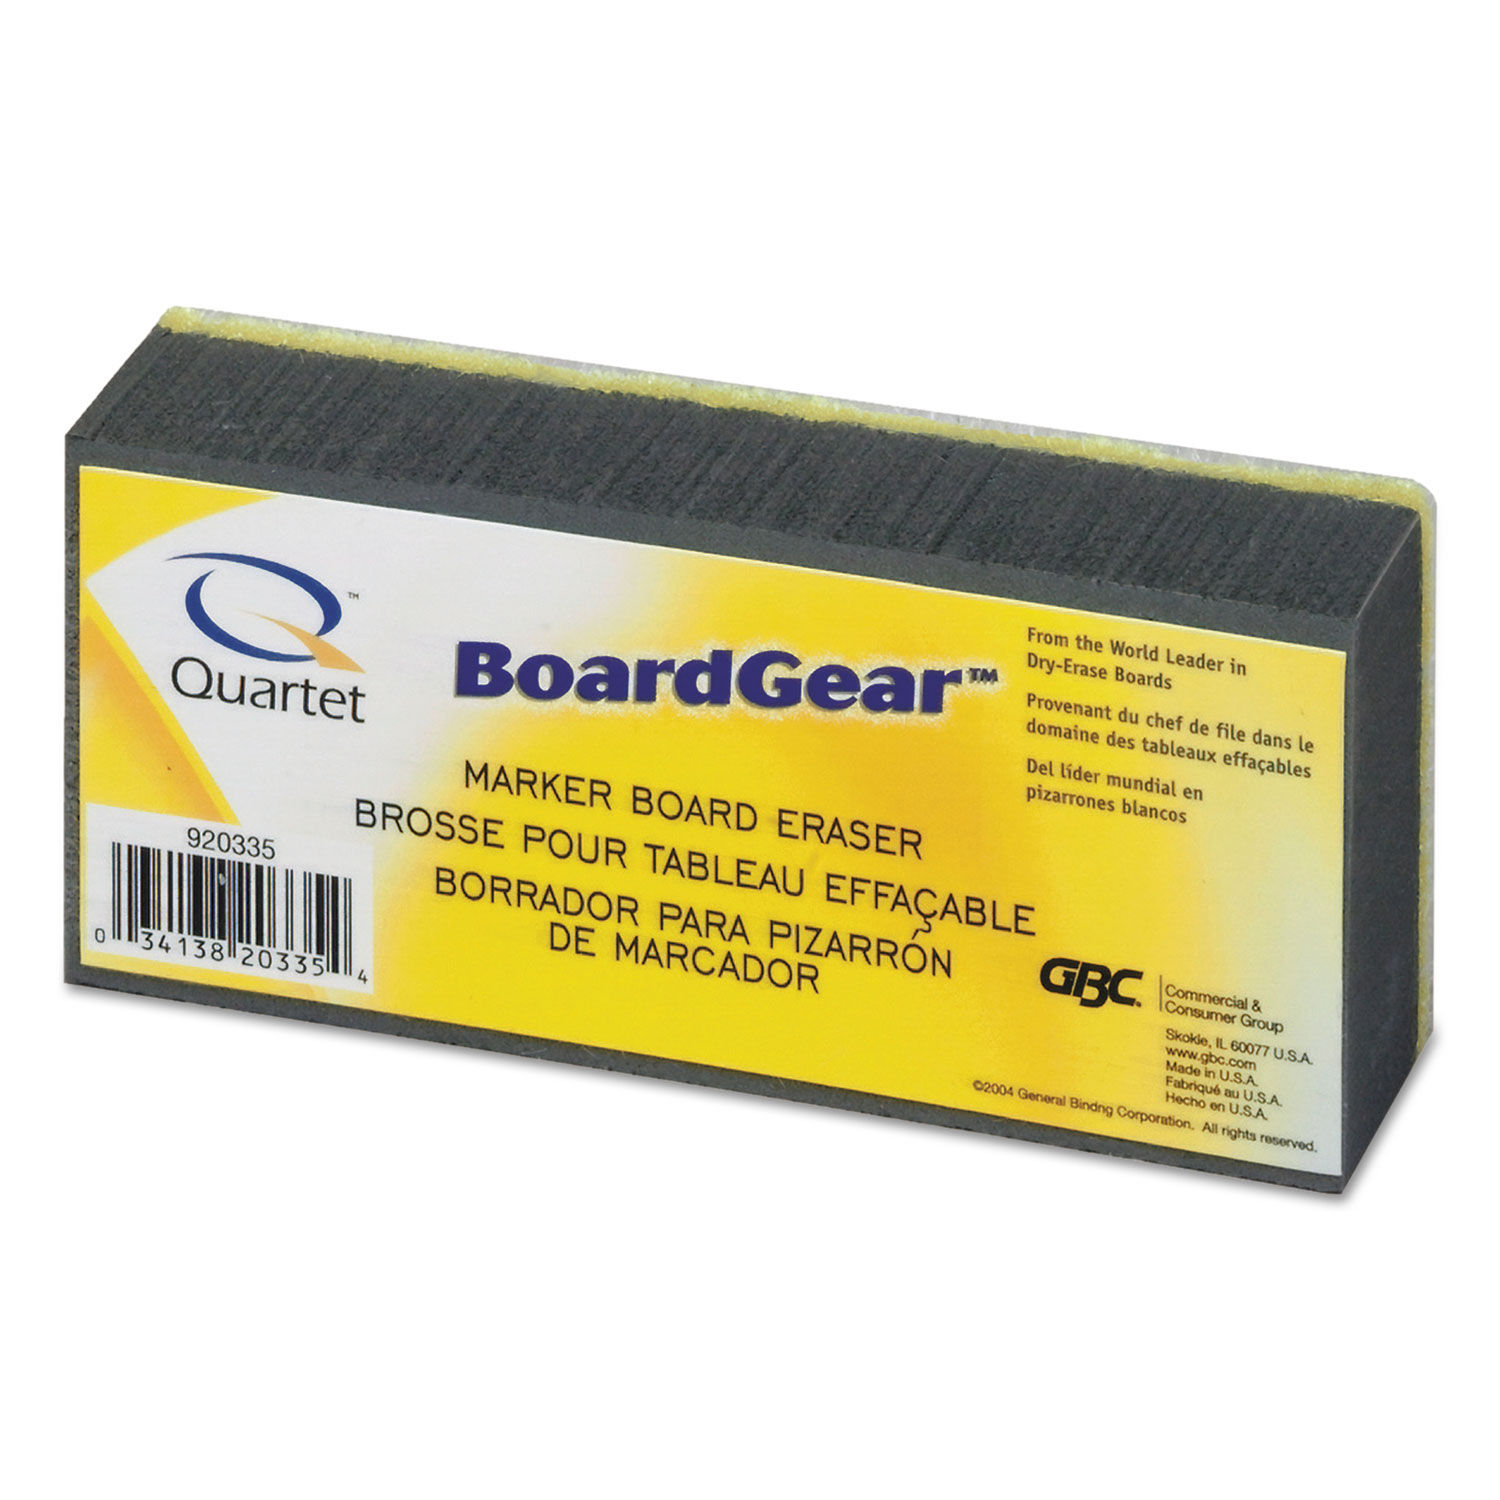 BoardGear Marker Board Eraser 5" x 2.75" x 1.38"